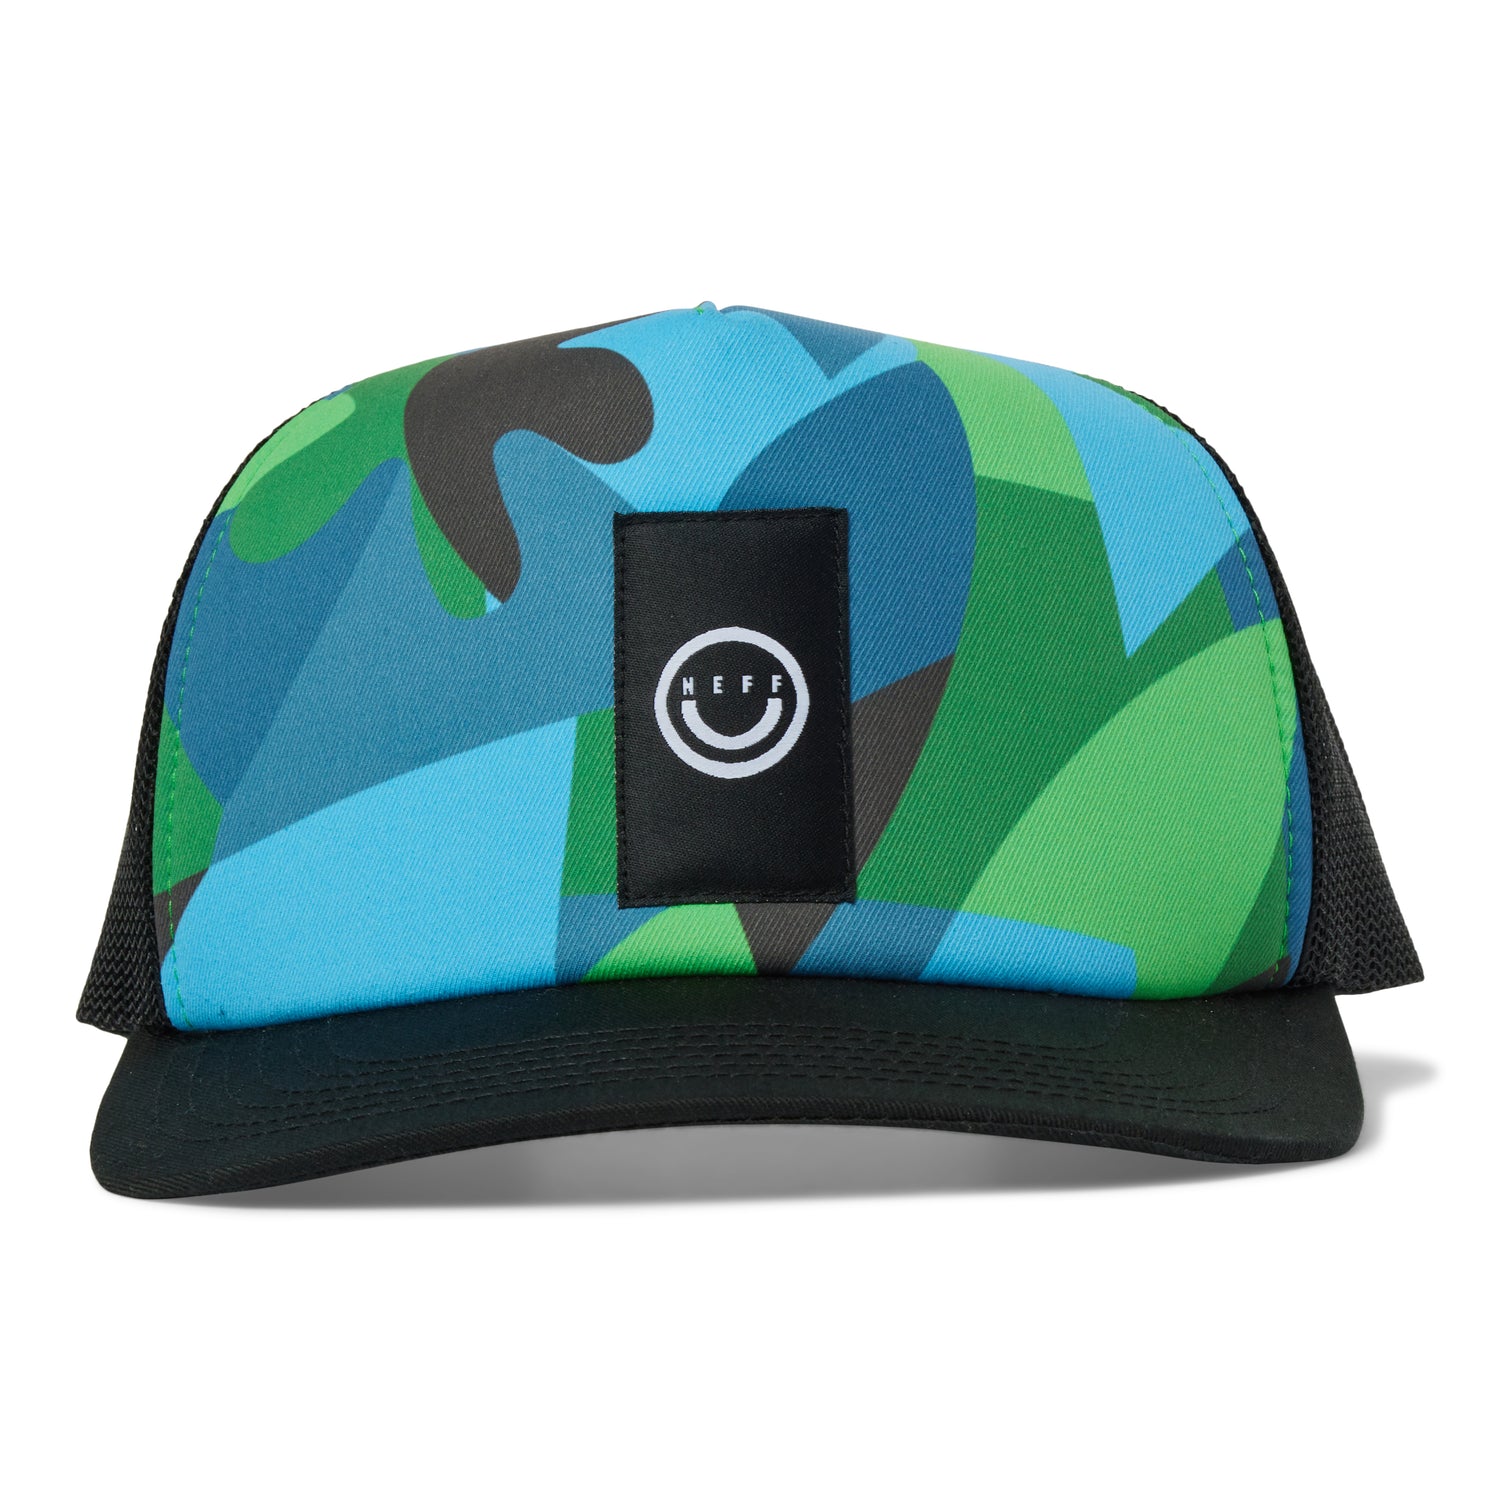 BILLBOARD SNAPBACK HAT - BLUE/GREEN